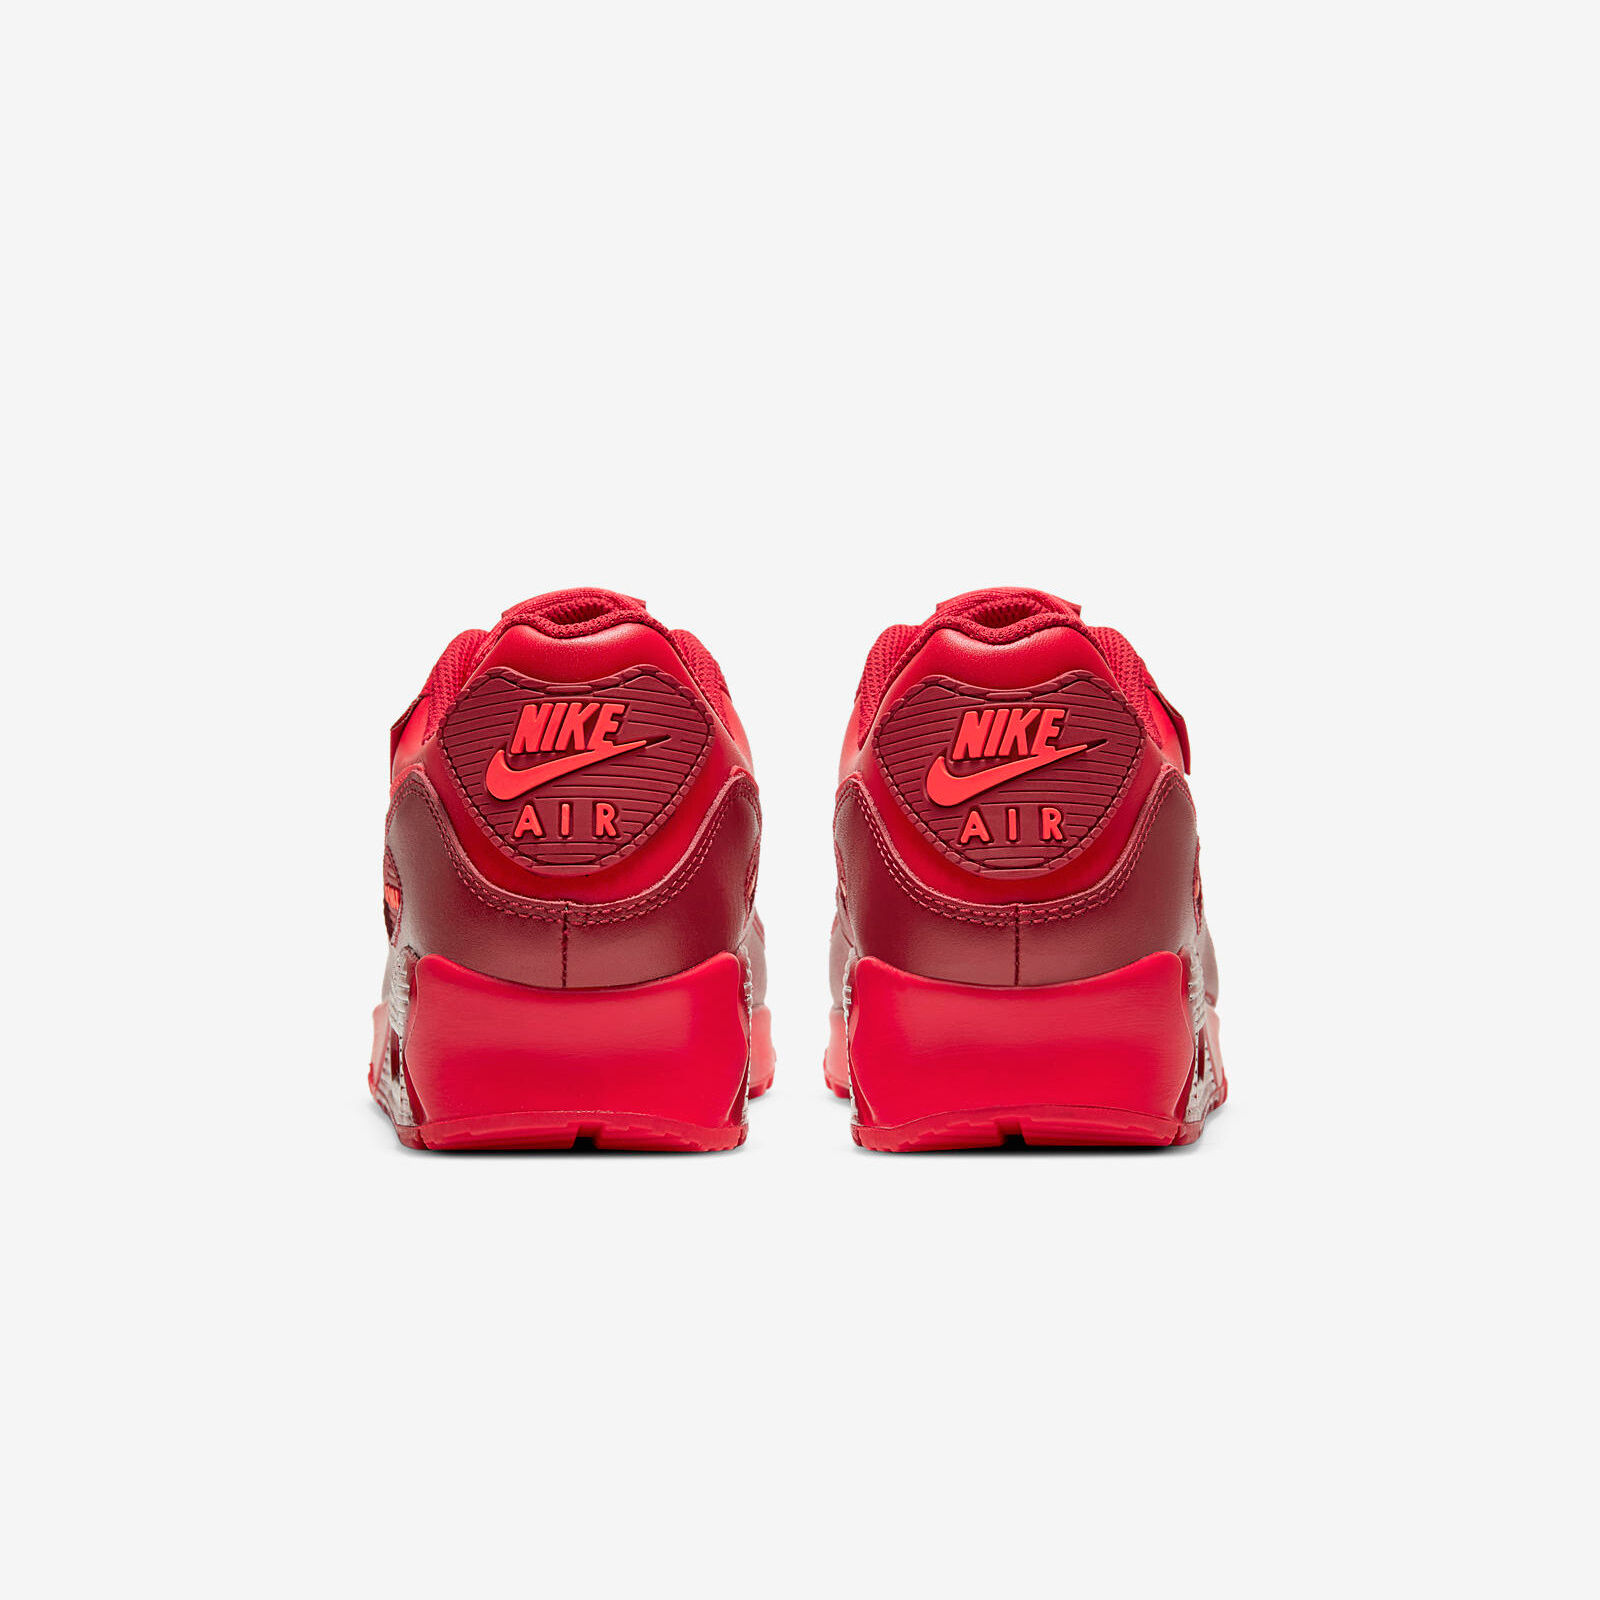 Nike Air Max 90
« CHI »